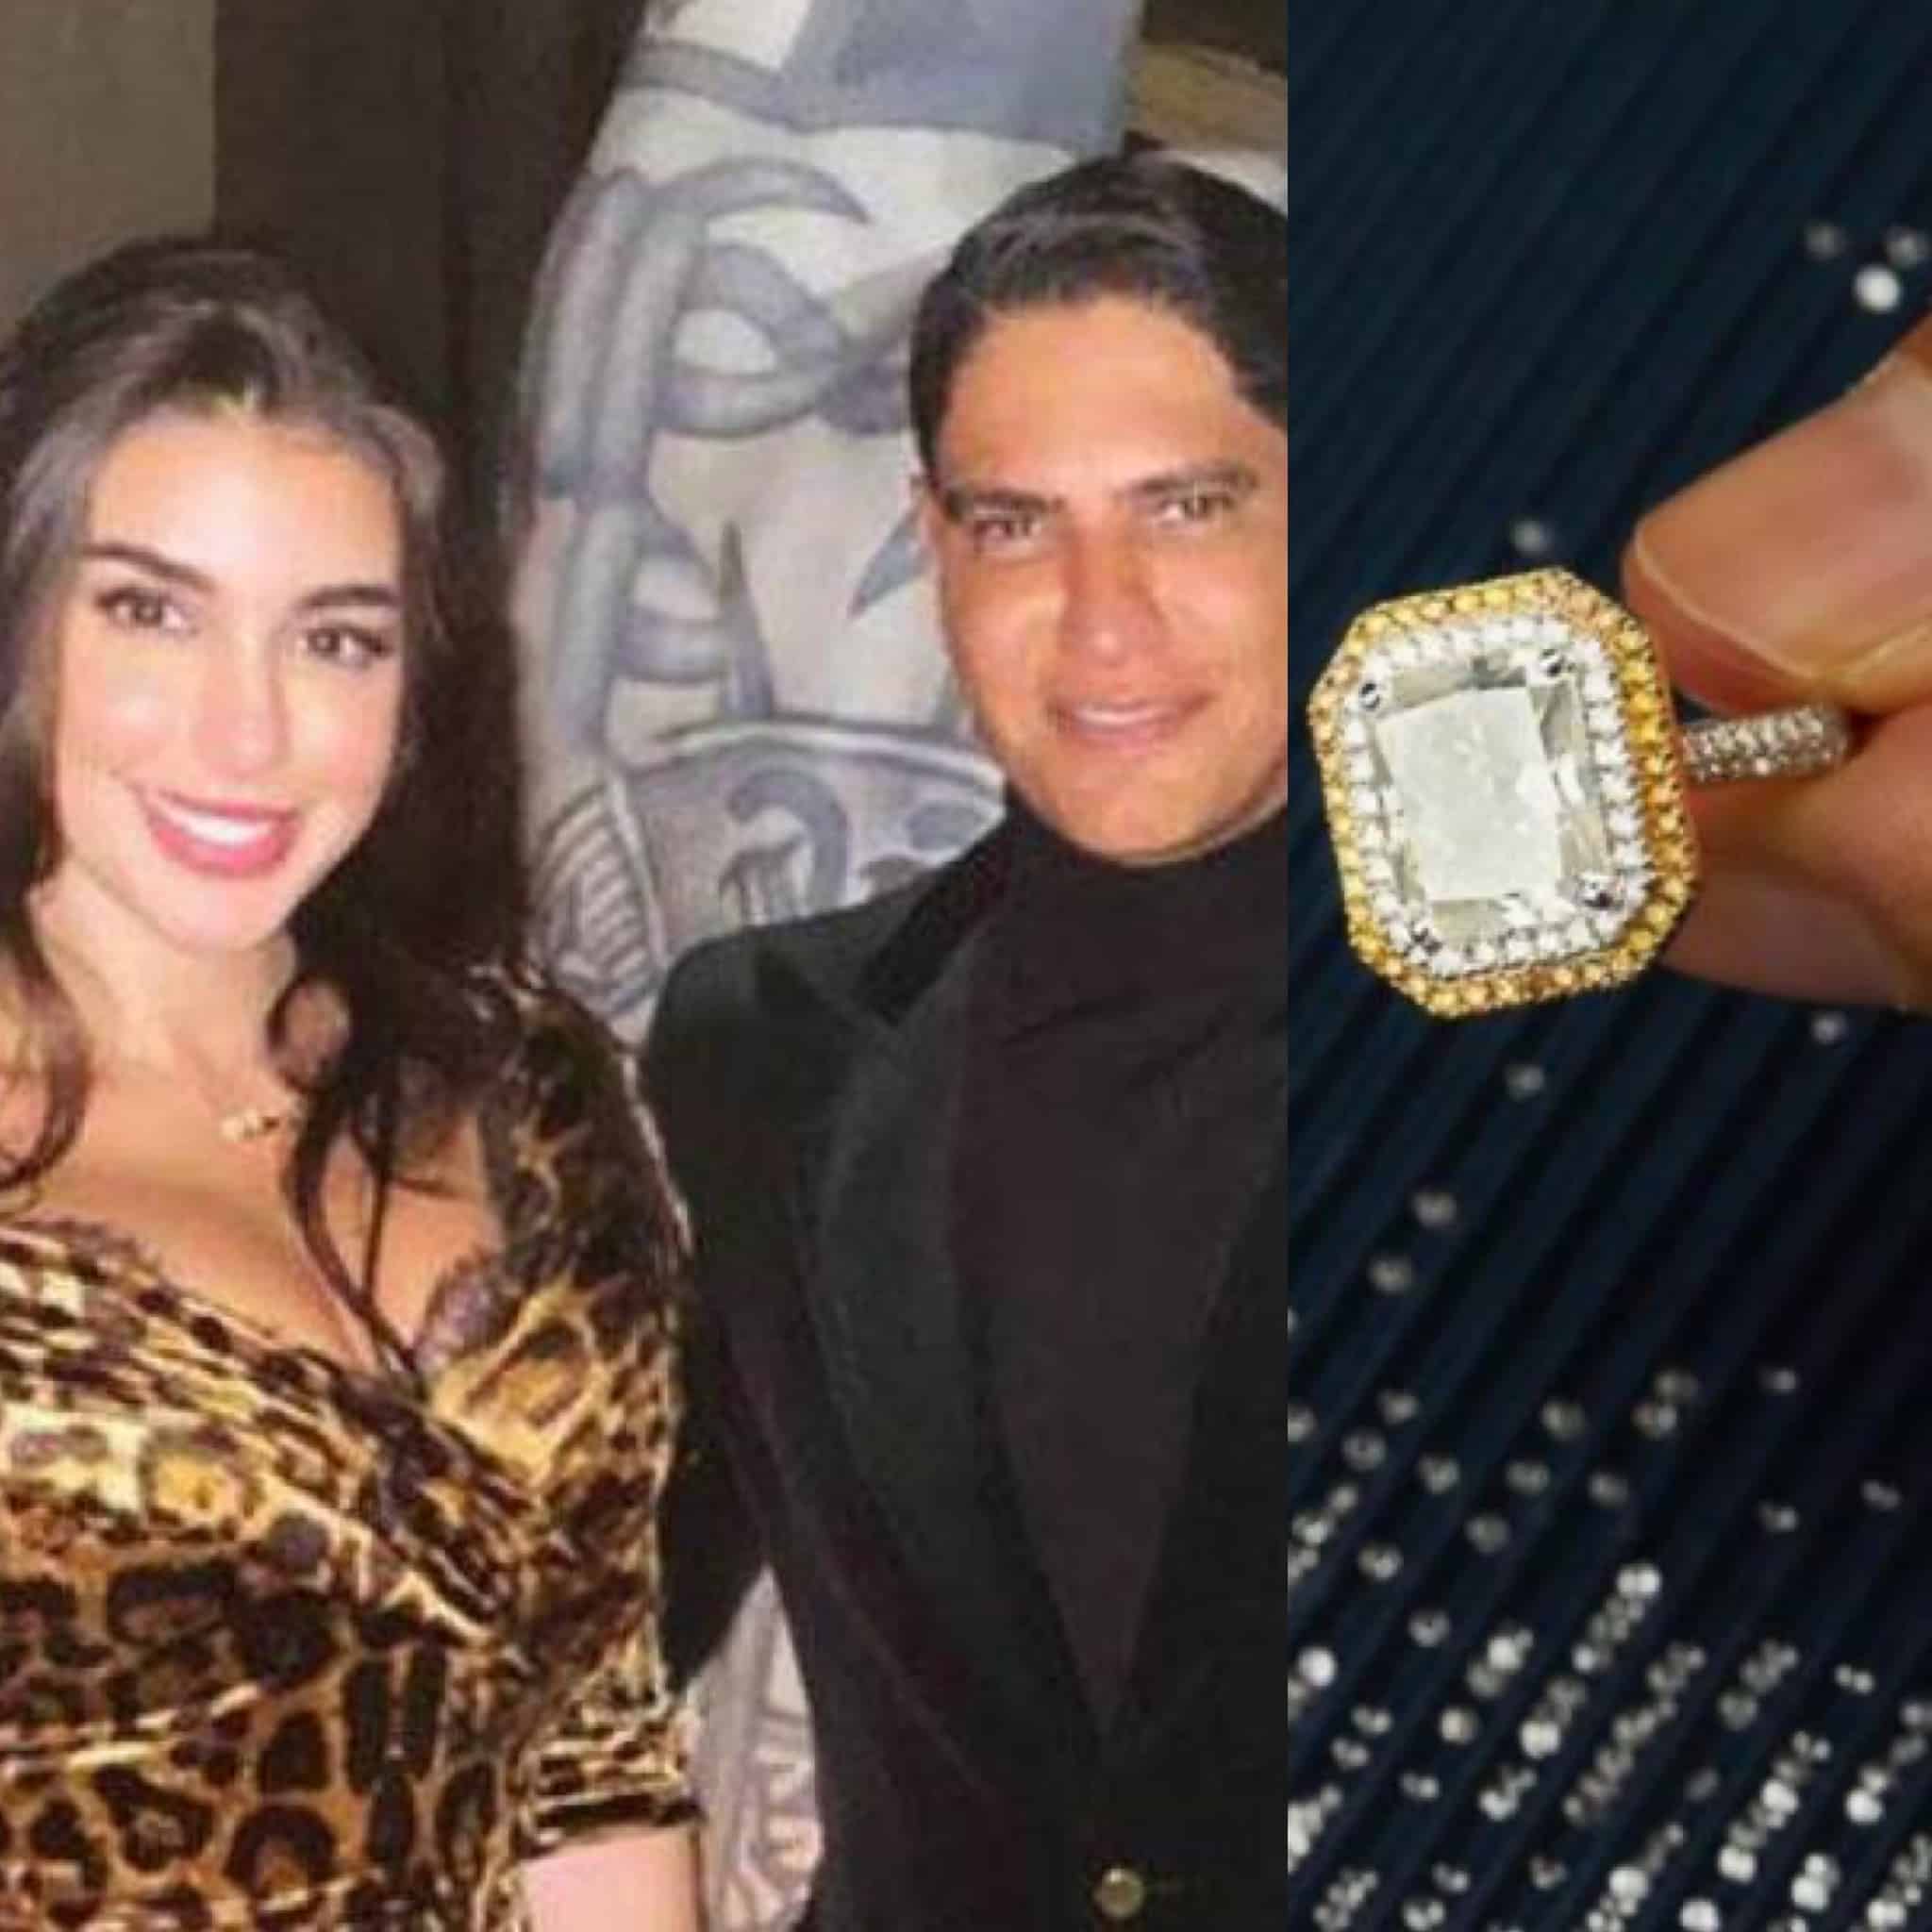 Yasmine Sabry's engagement ring